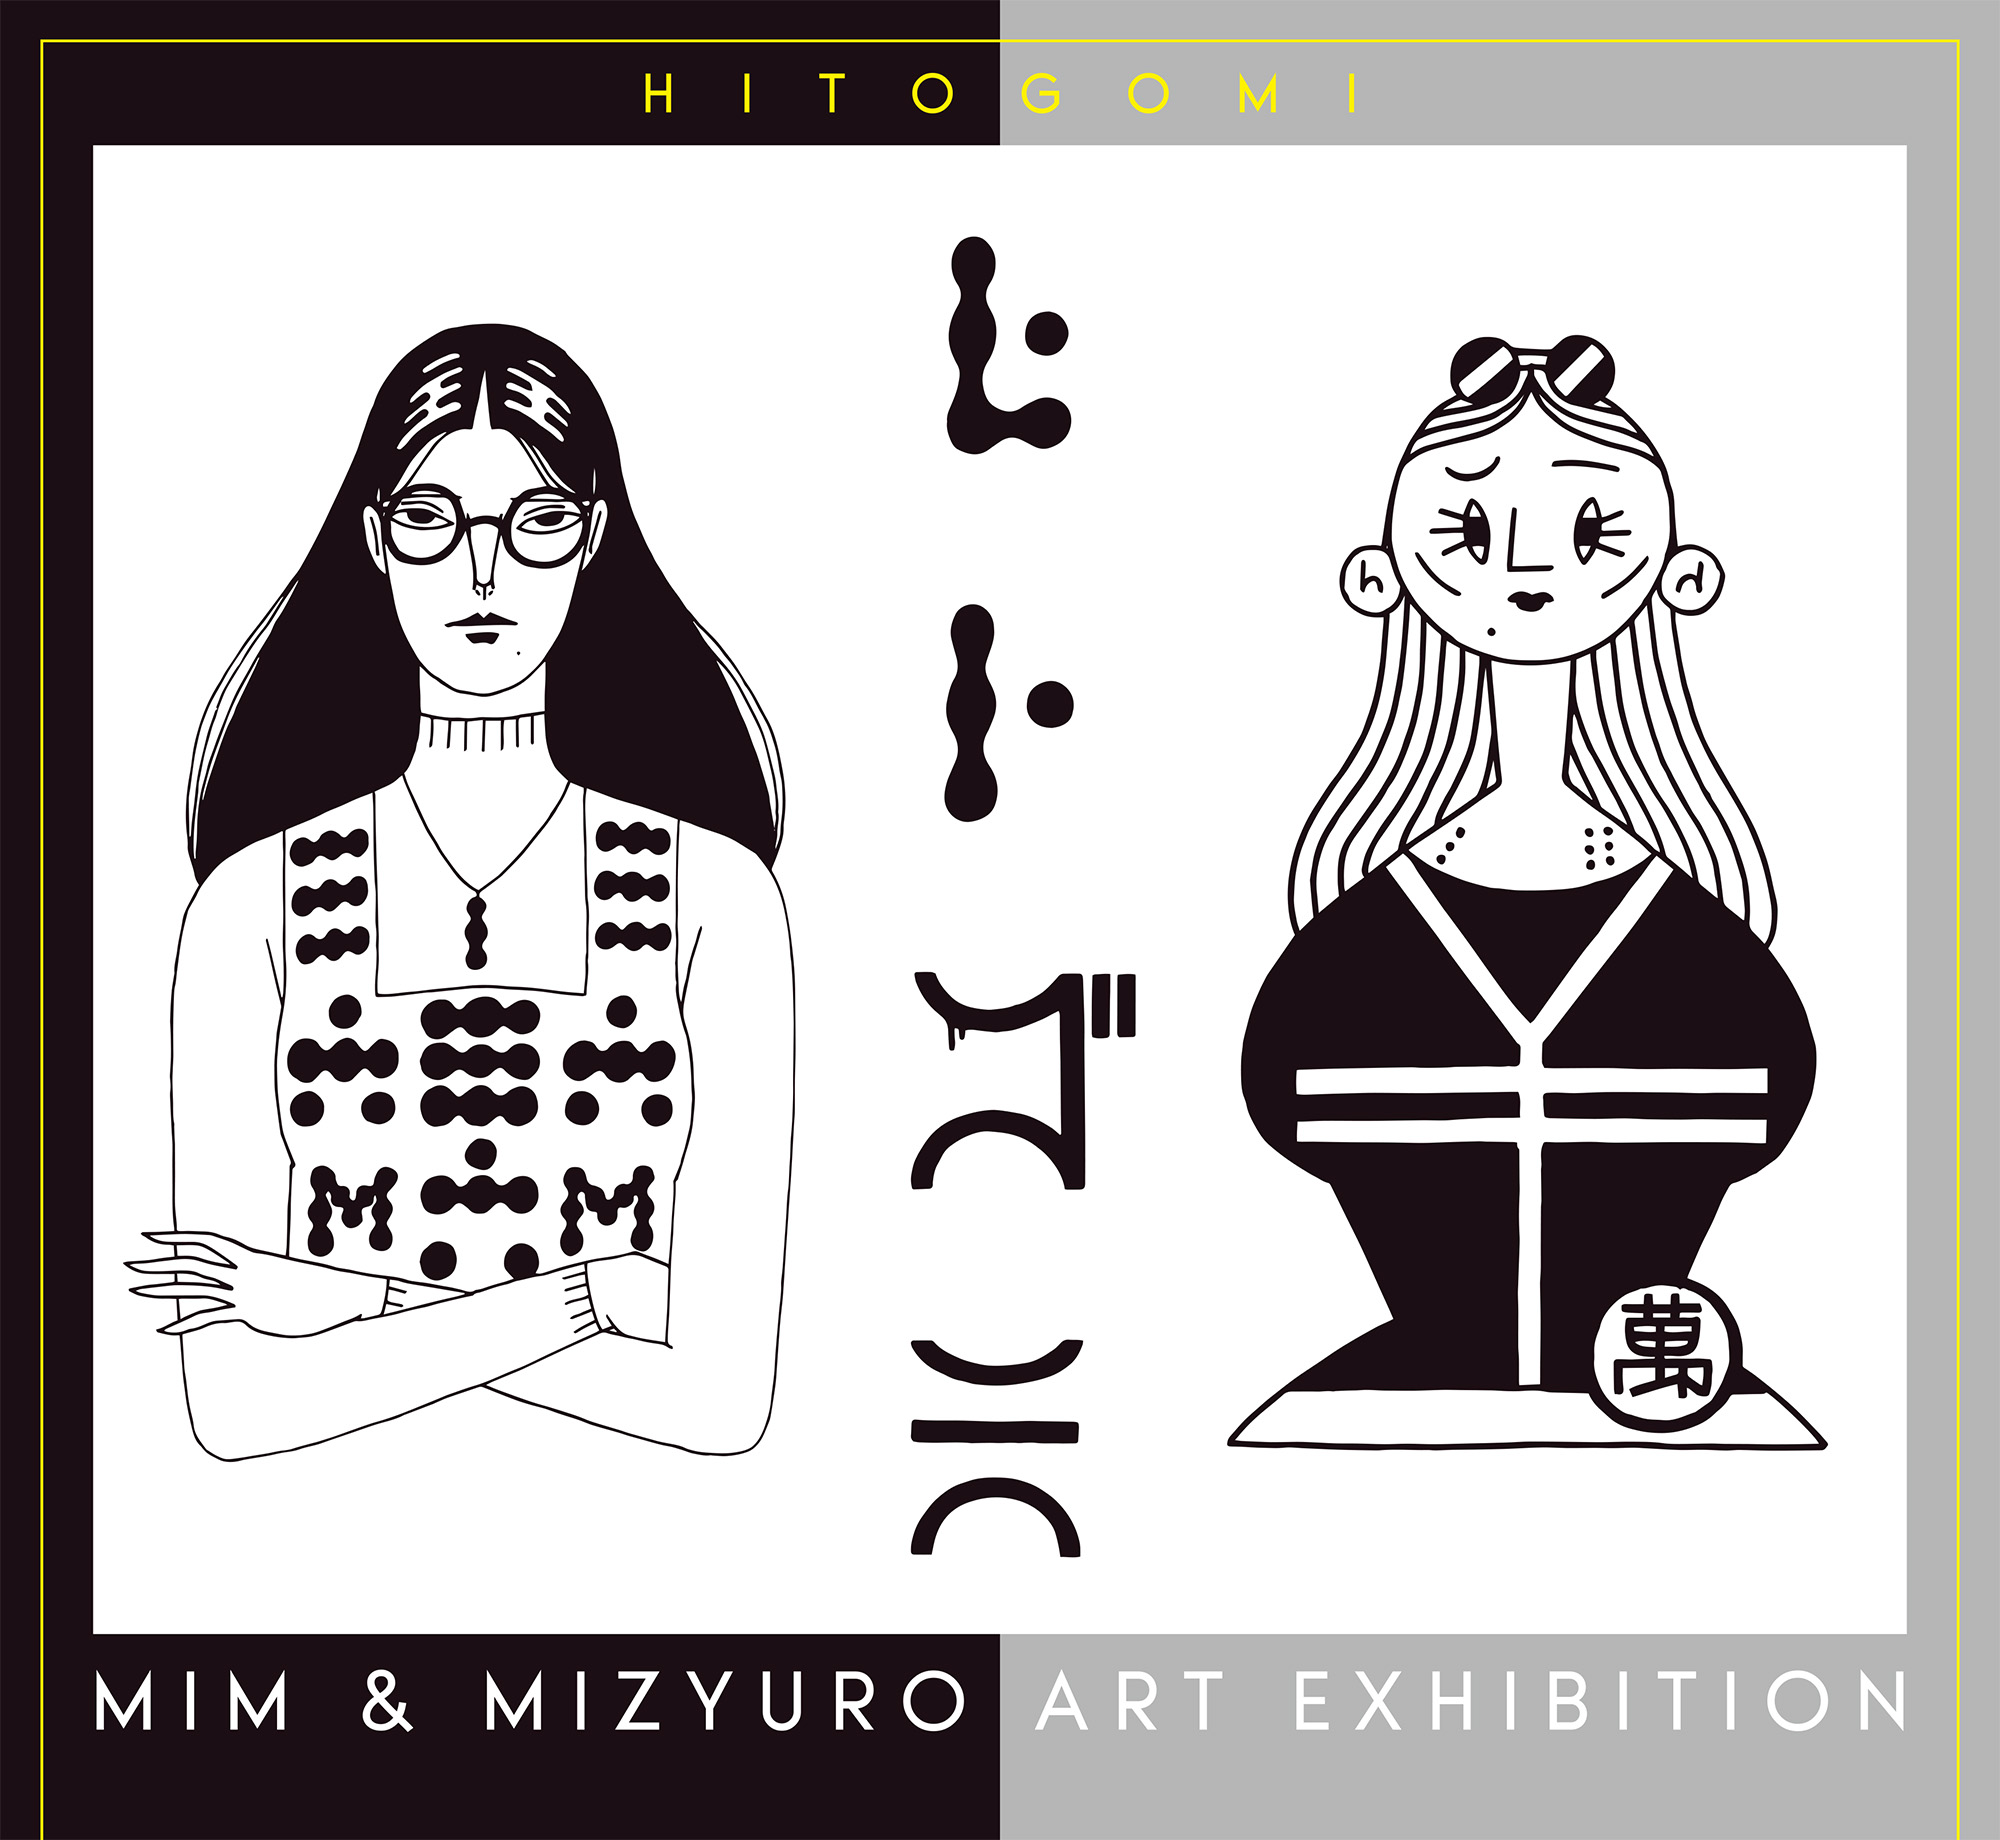 hitogomi by MIM & MIZYURO exhibition